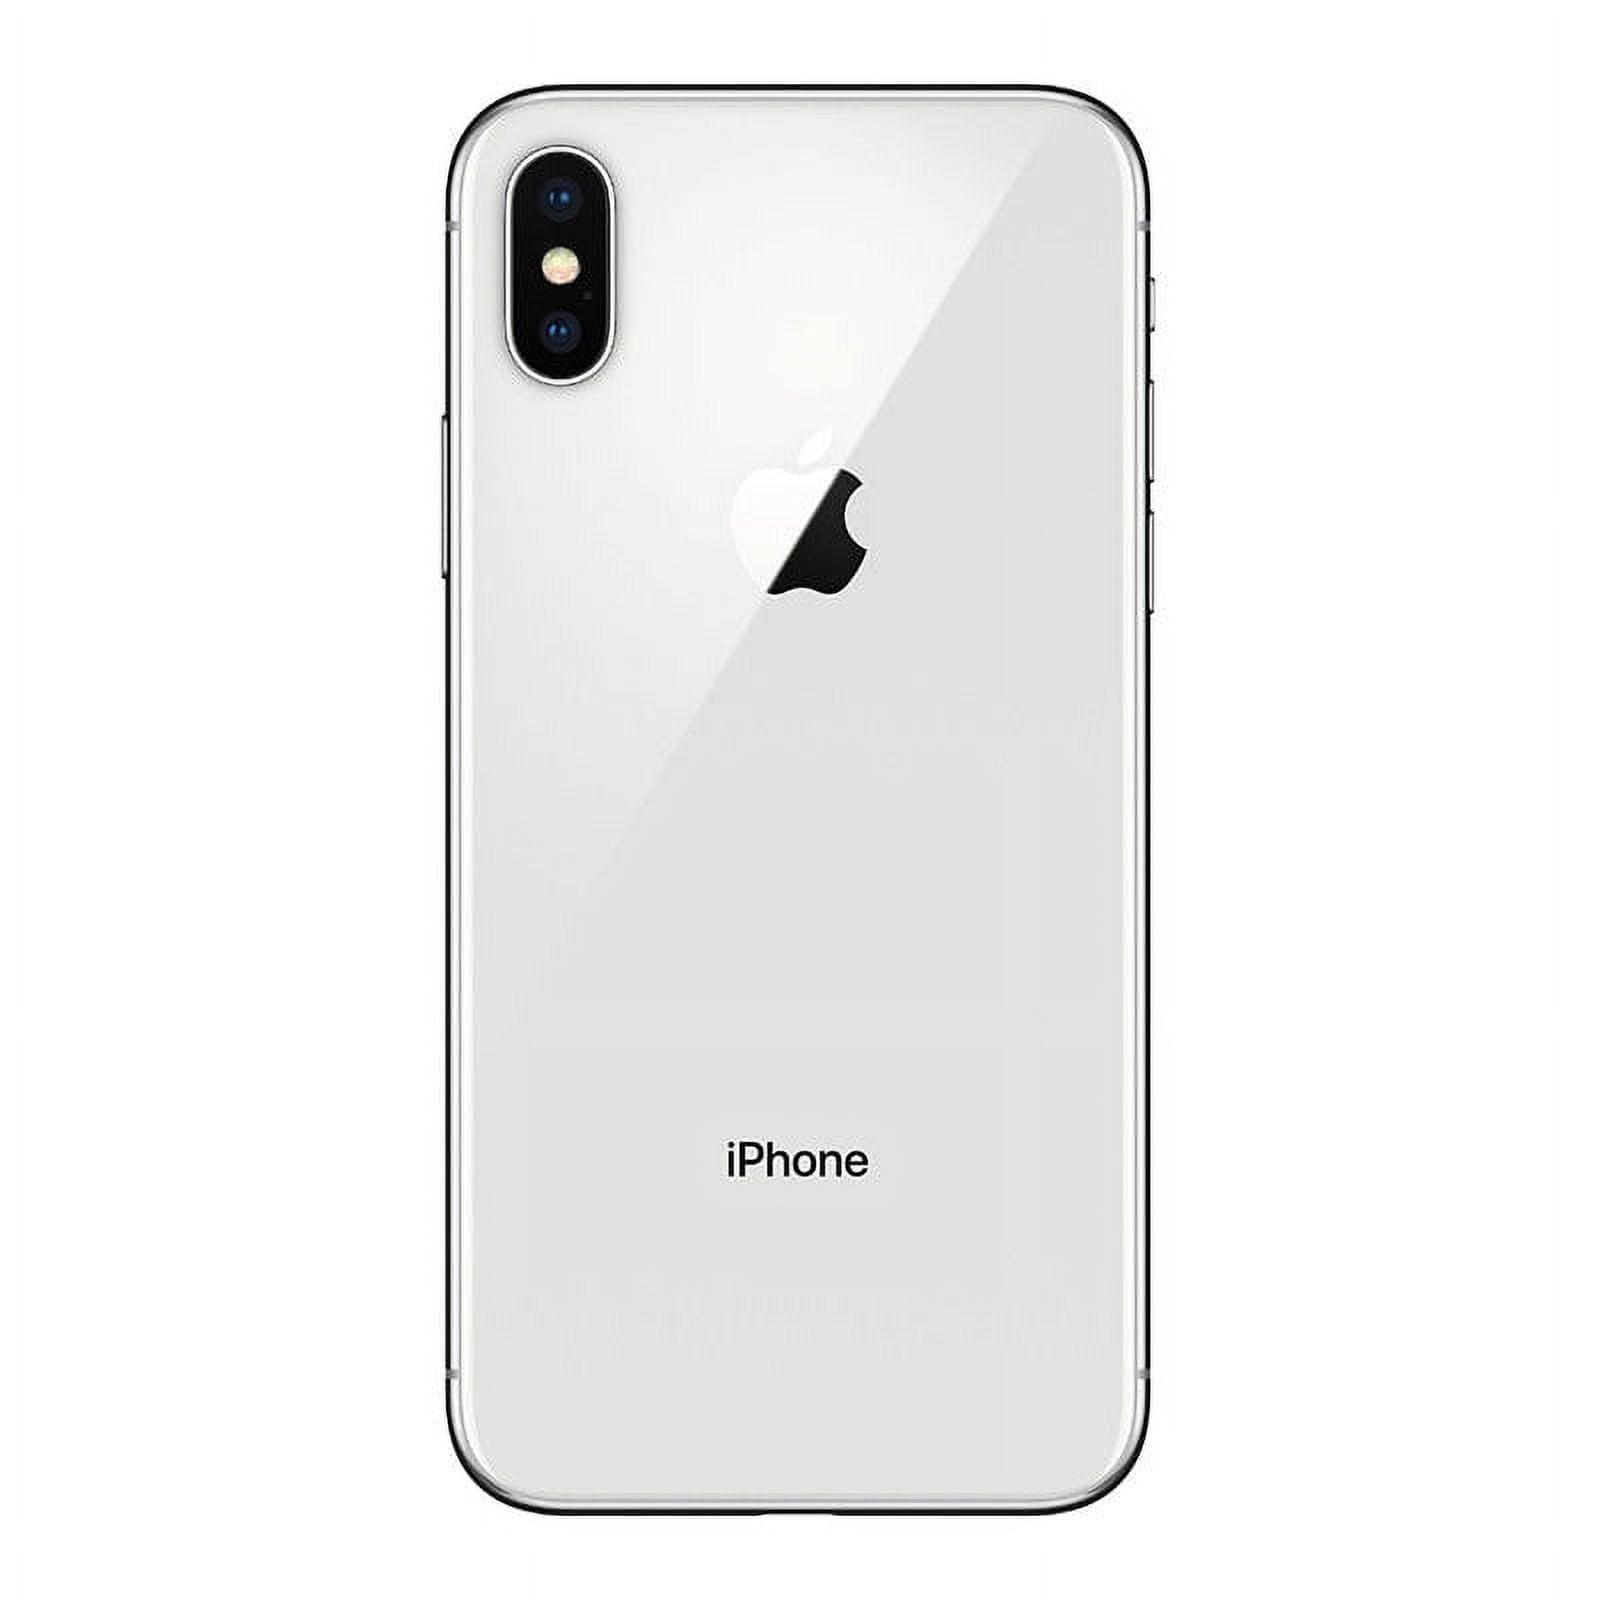 Pre-Owned Apple iPhone X 256GB Factory Unlocked Smartphone (Refurbished:  Good)